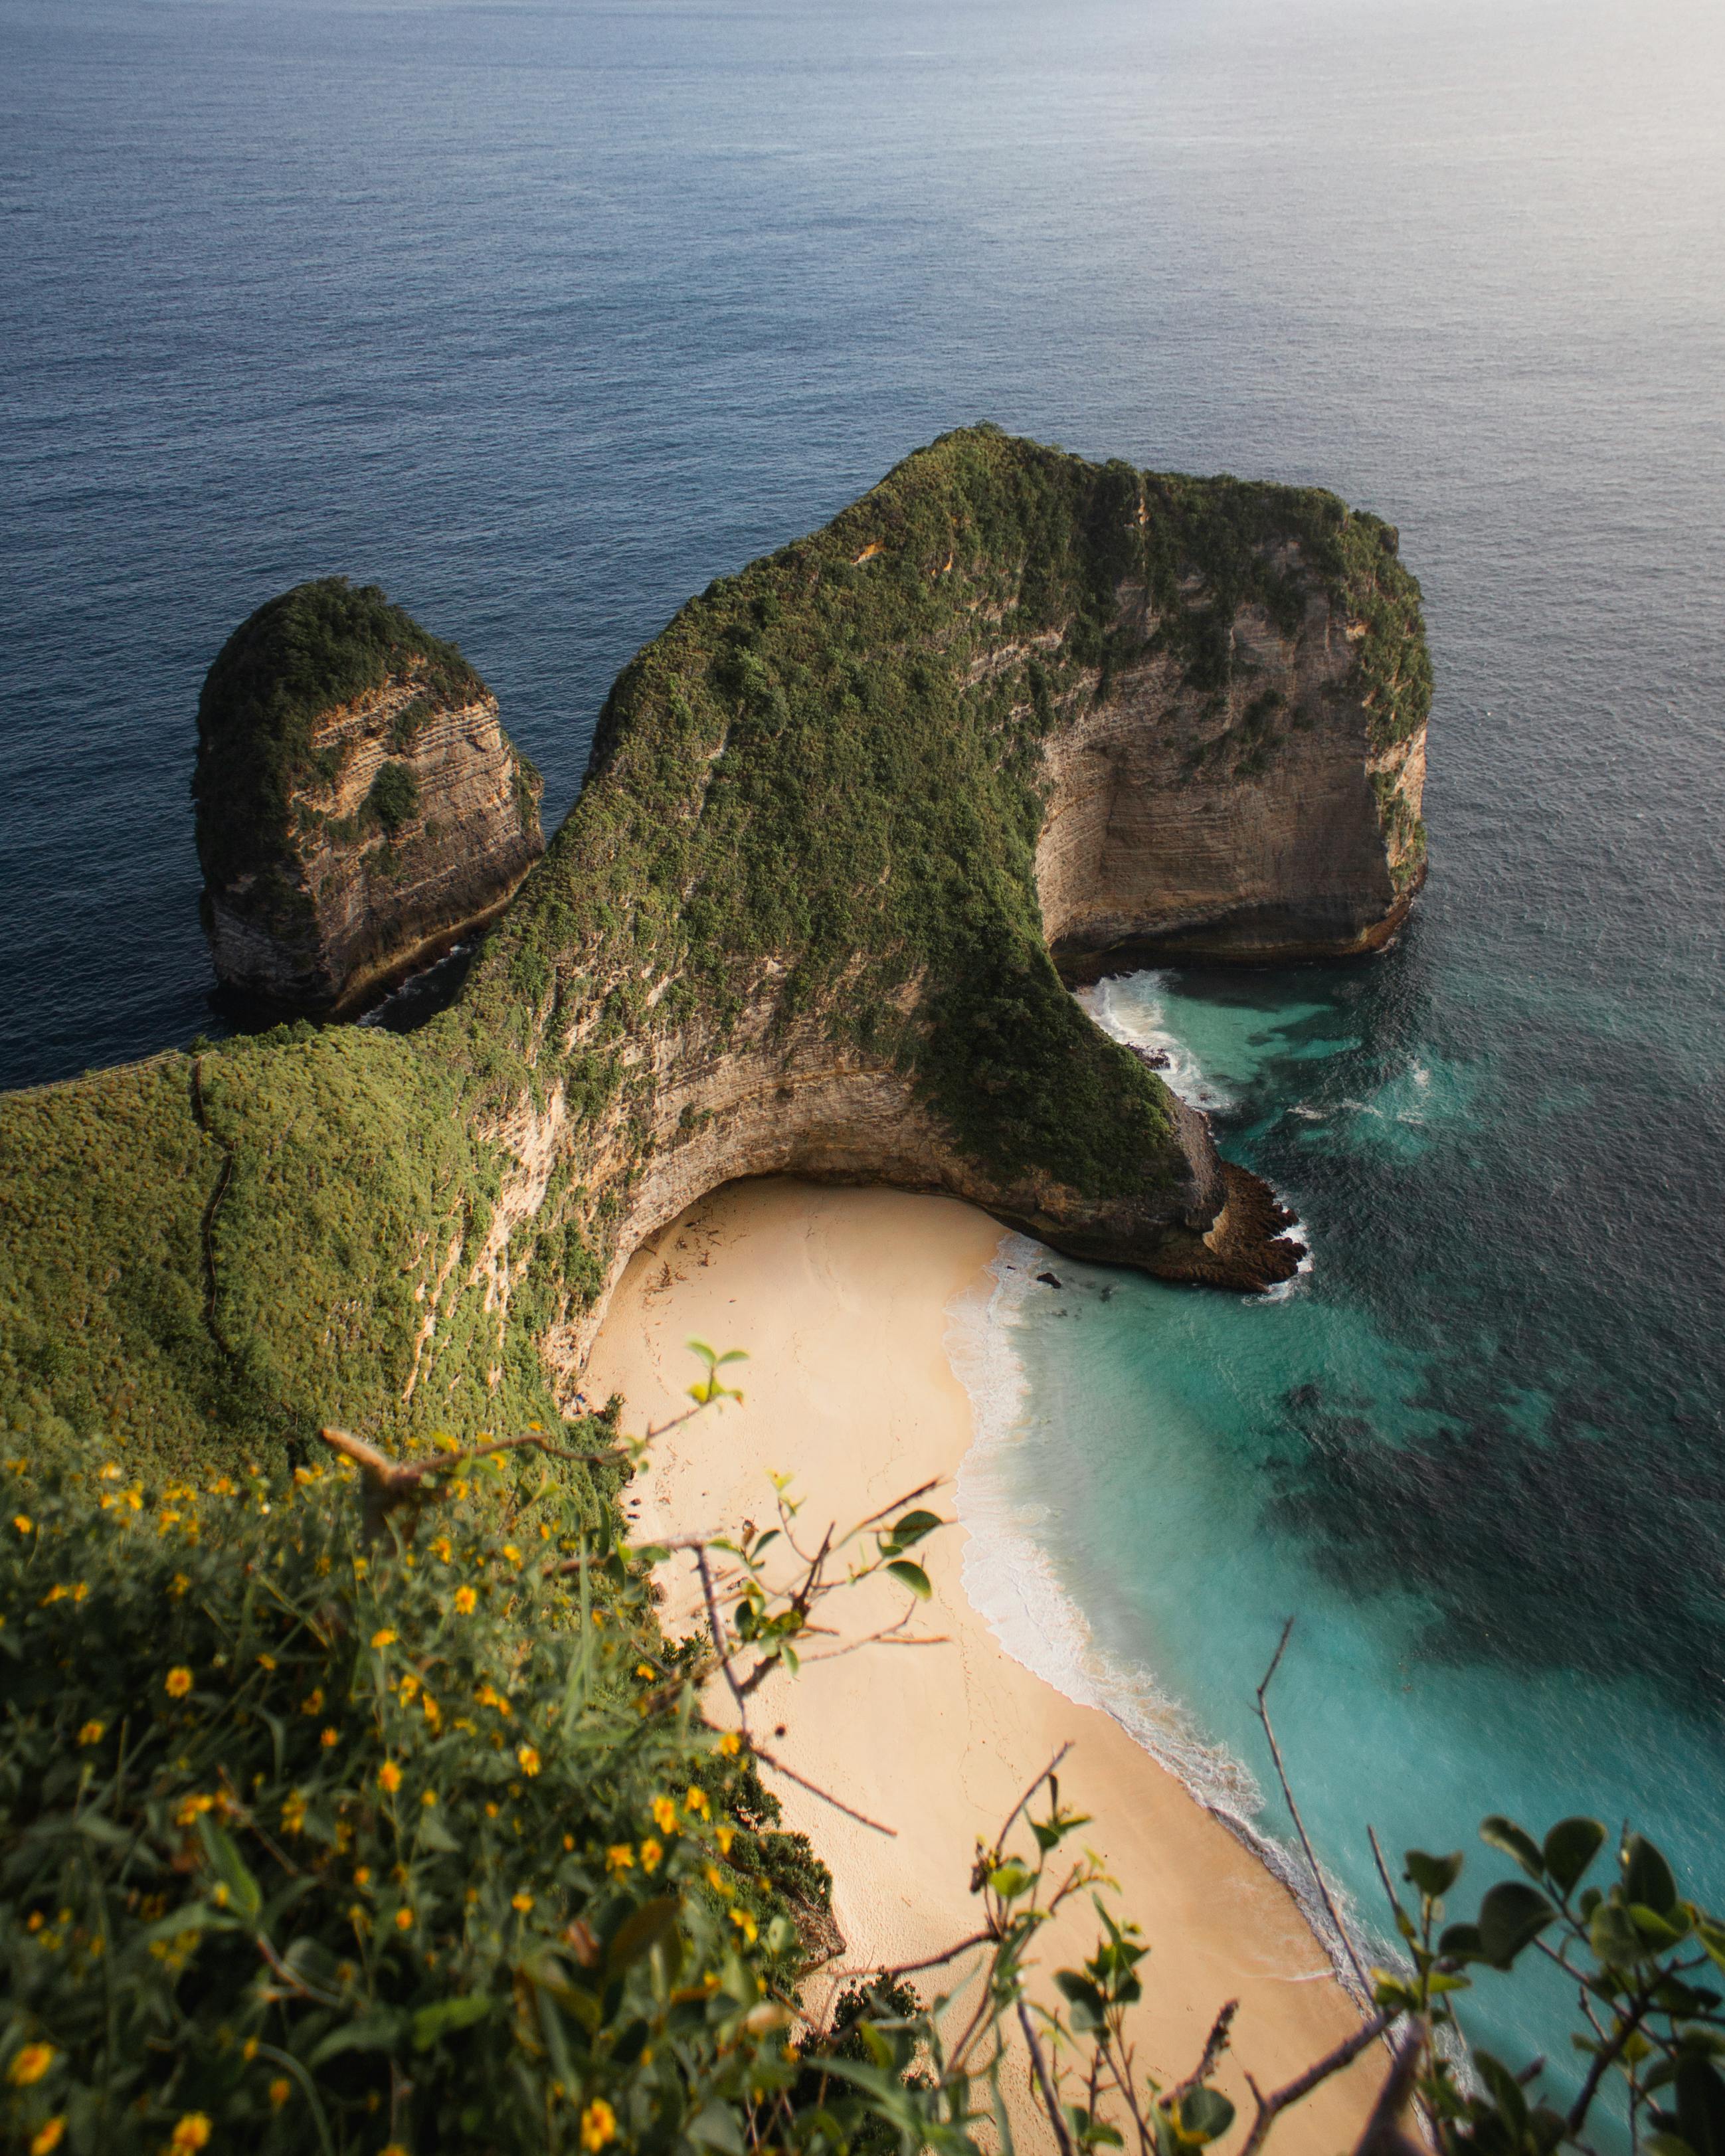 Bali Beach Photos, Download The BEST Free Bali Beach Stock Photos & HD  Images